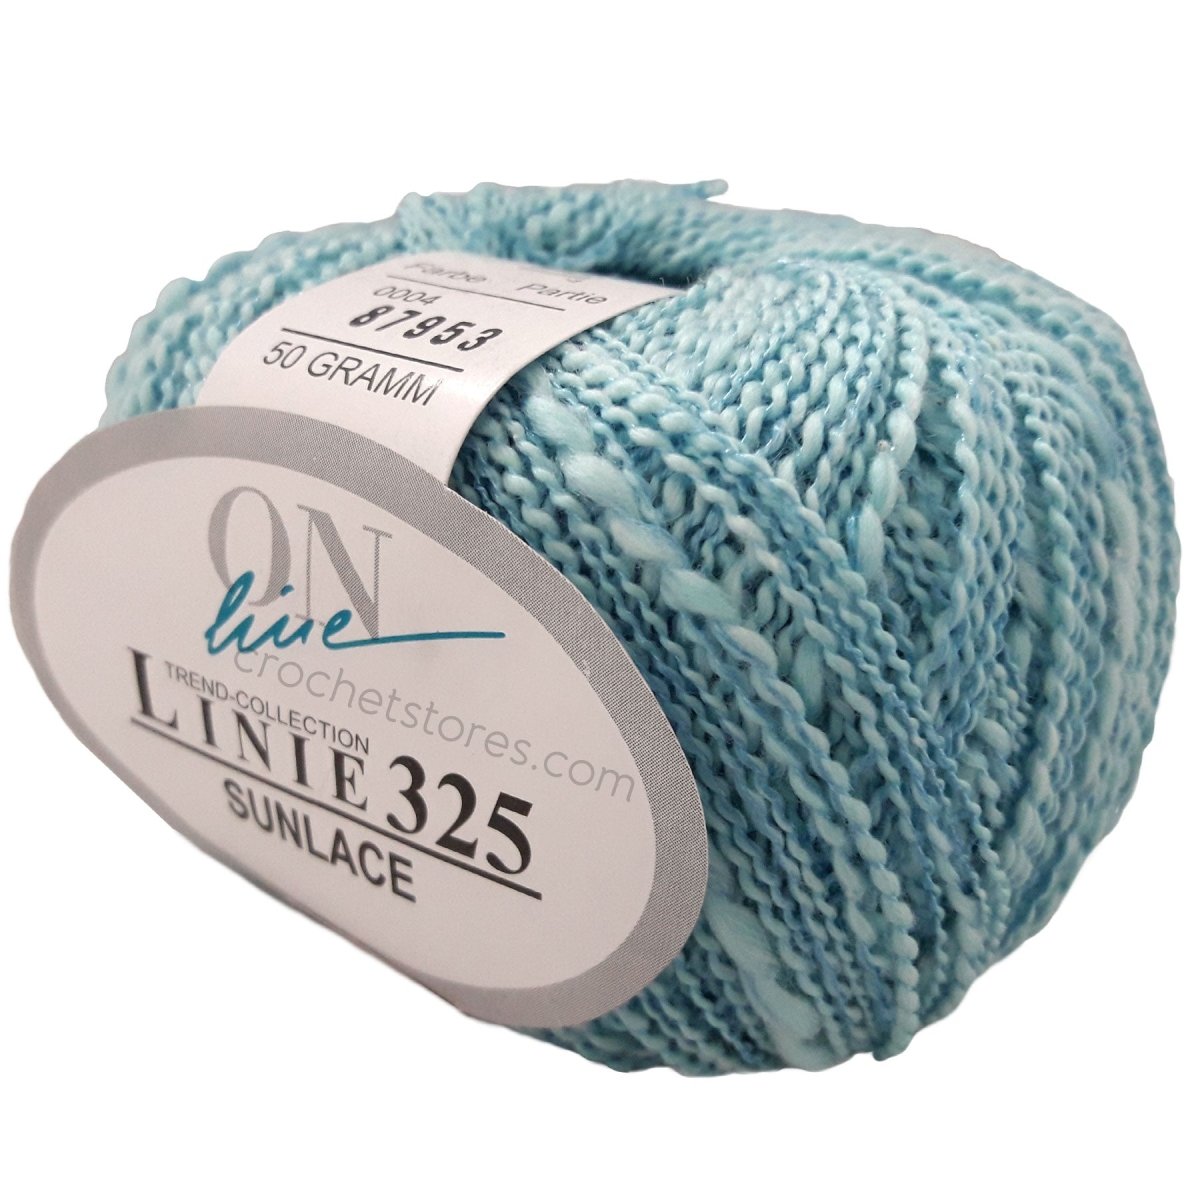 SUNLACE - Crochetstores110325-0044014366138396